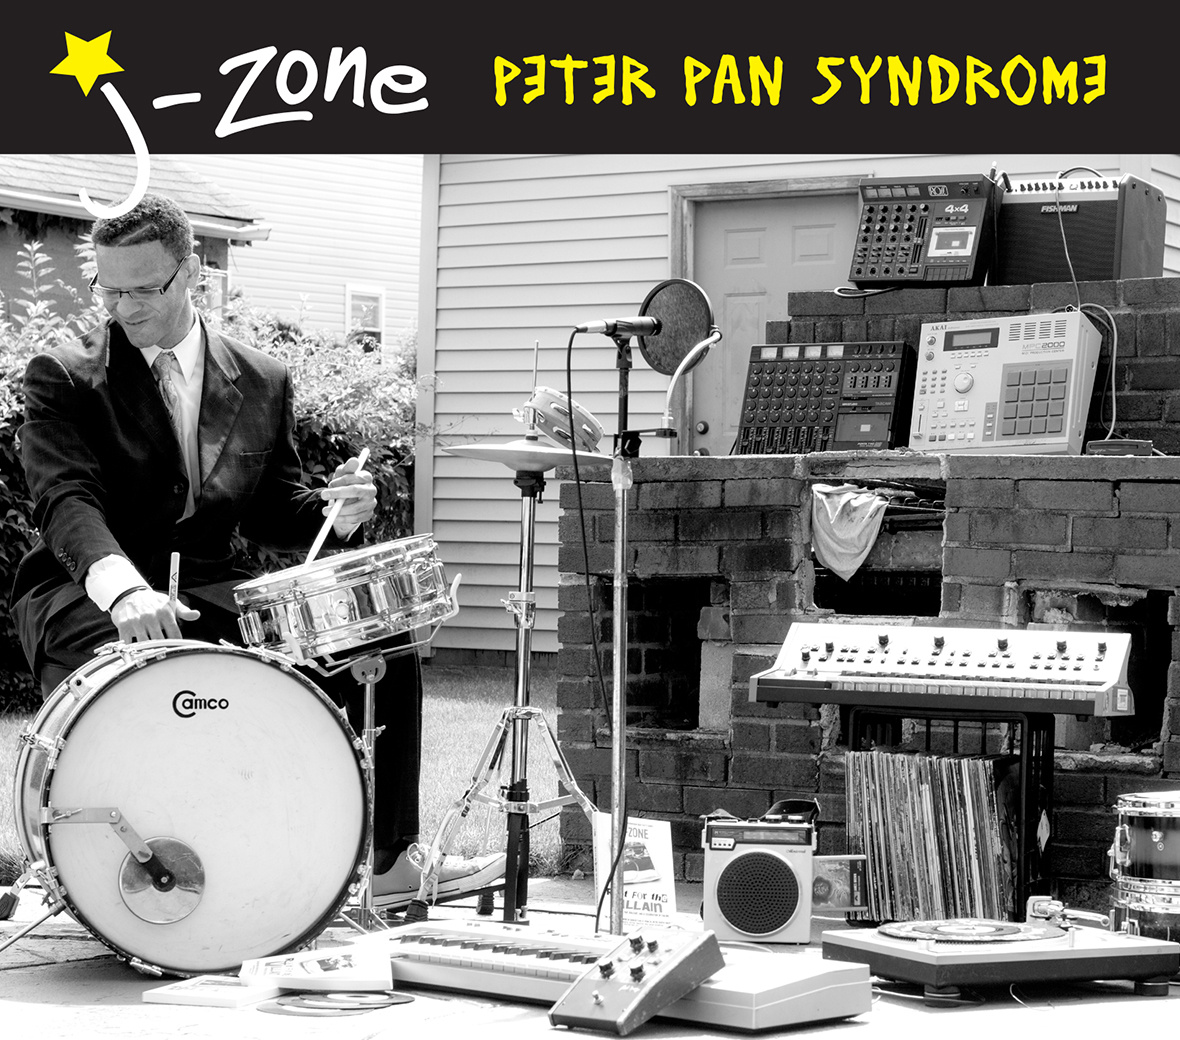 J-Zone "Peter Pan Syndrome" Release & "Gadget Ho" Video | @jzonedonttweet